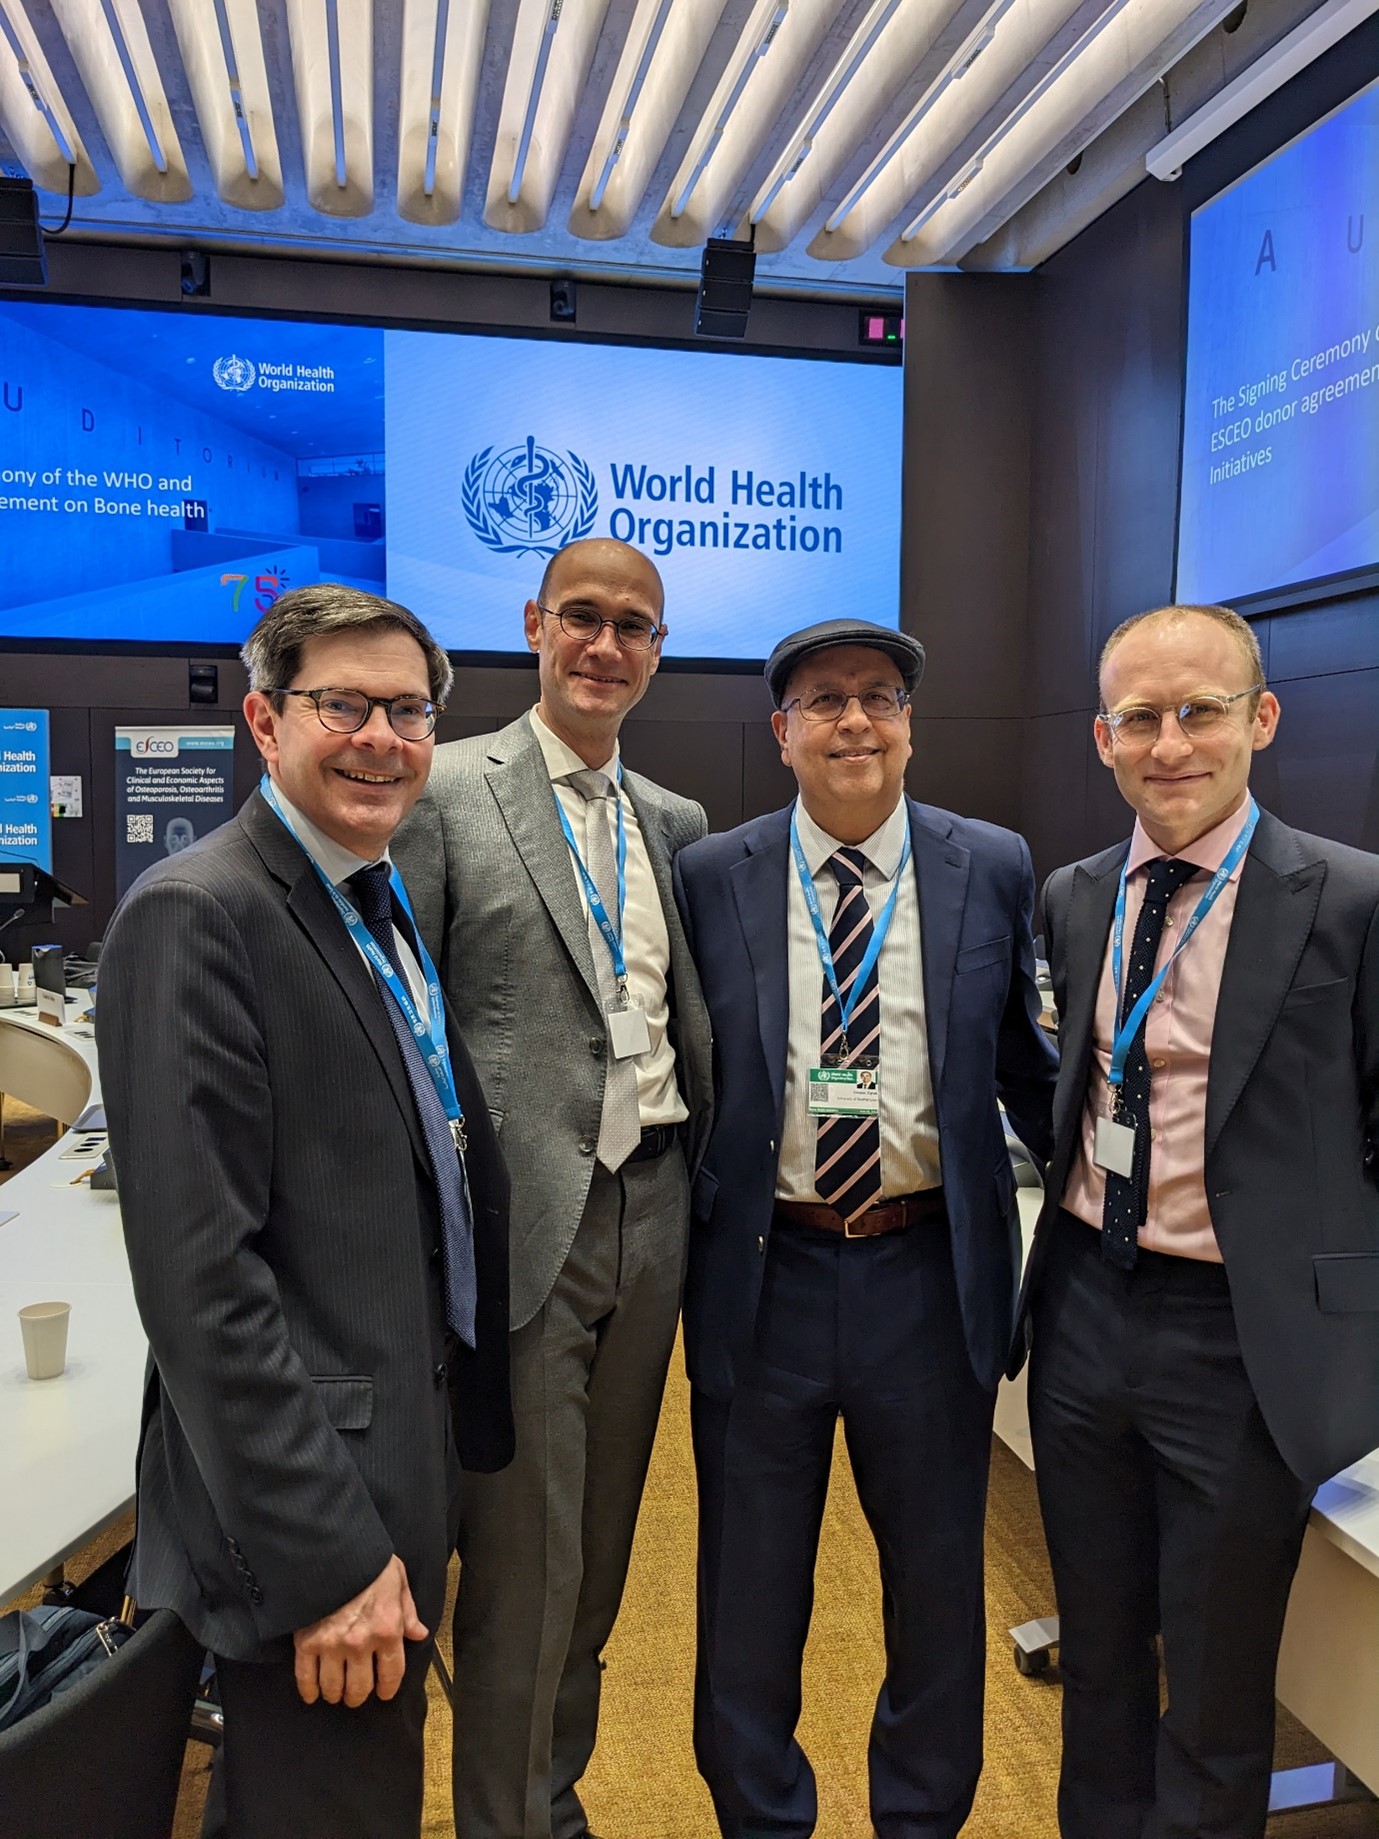 University of Southampton researchers contribute to new World Health Organization collaboration